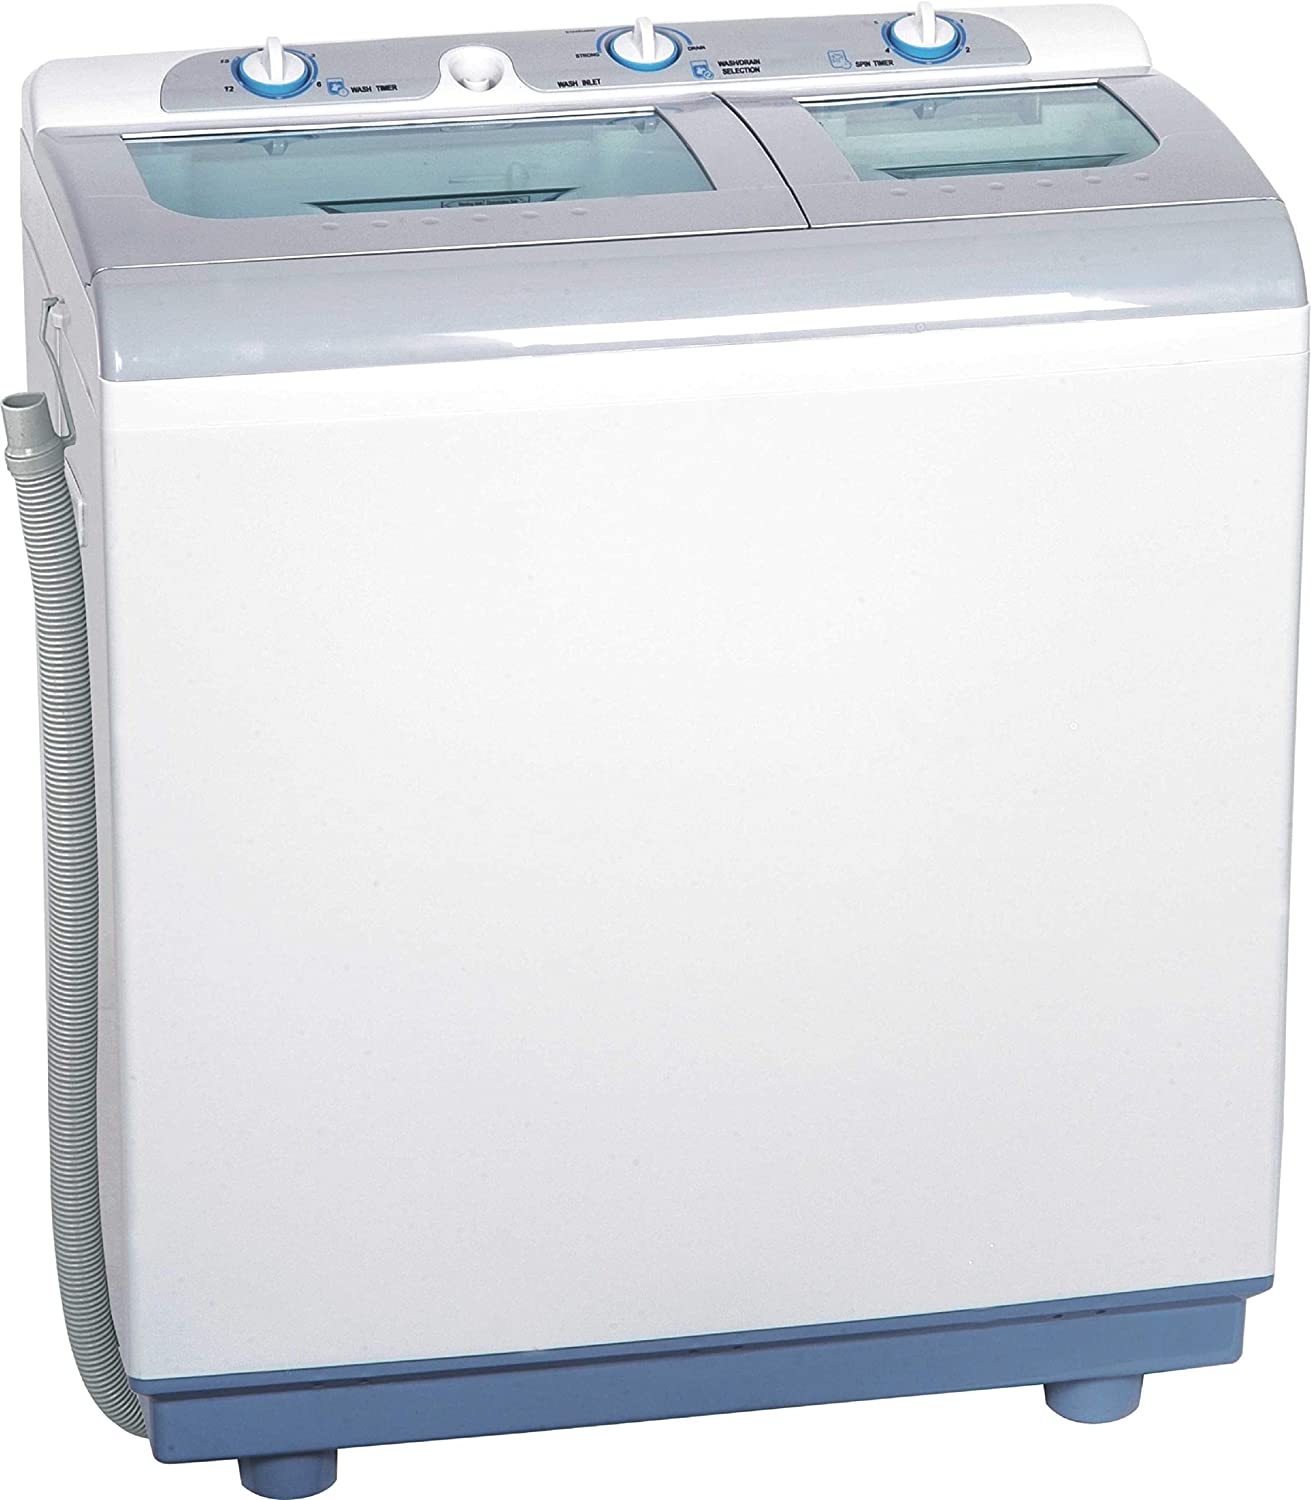 Thompson Twin Tub Washer washing machine